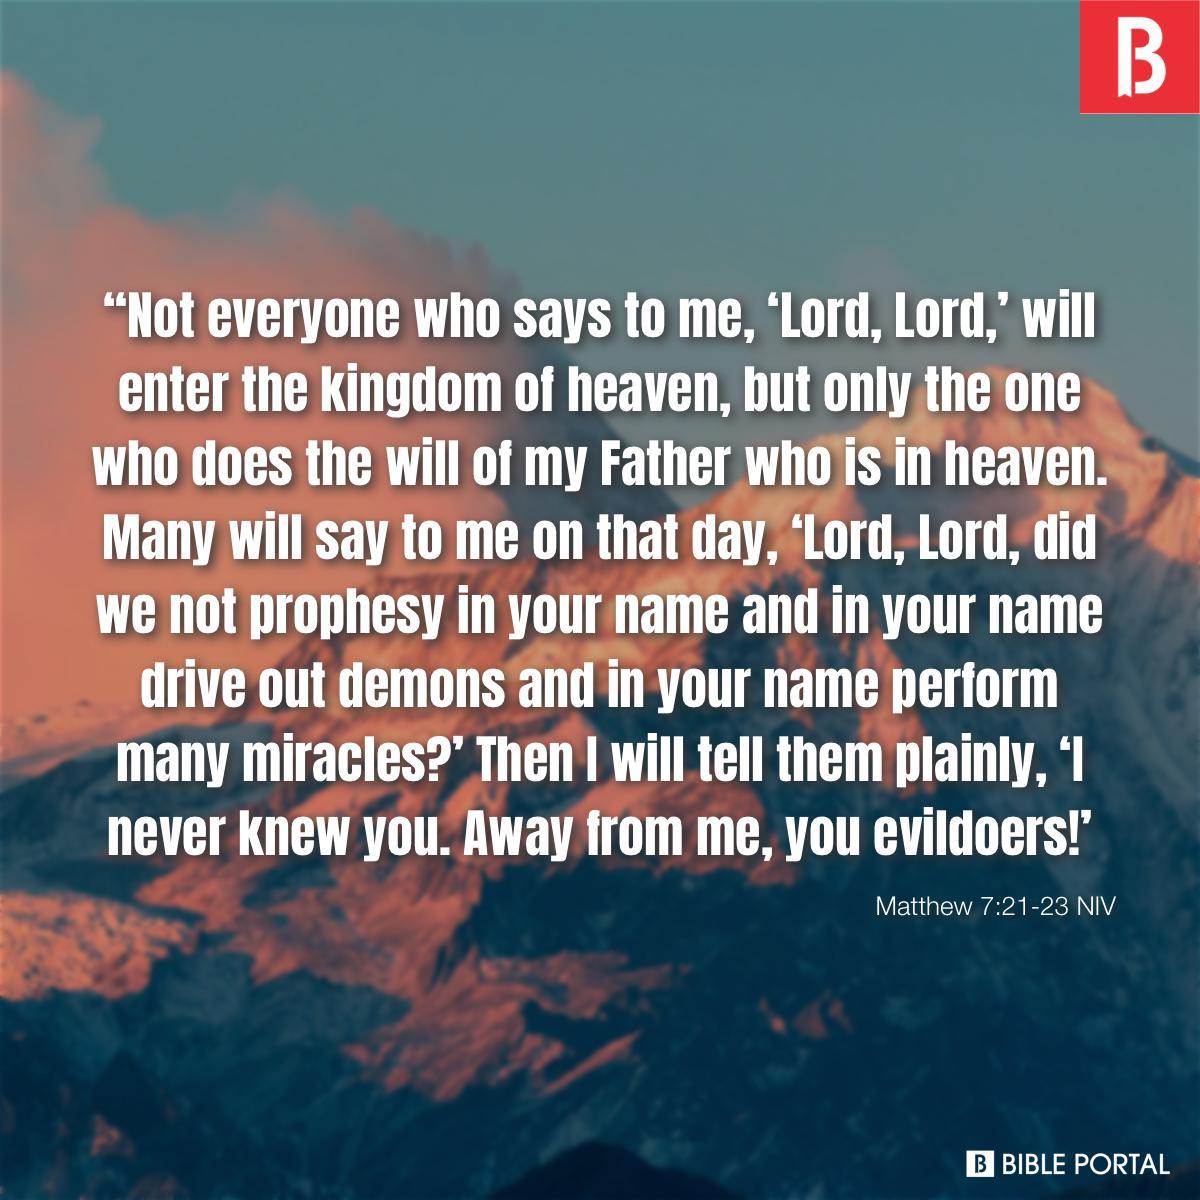 Matthew 7:21-23 NIV